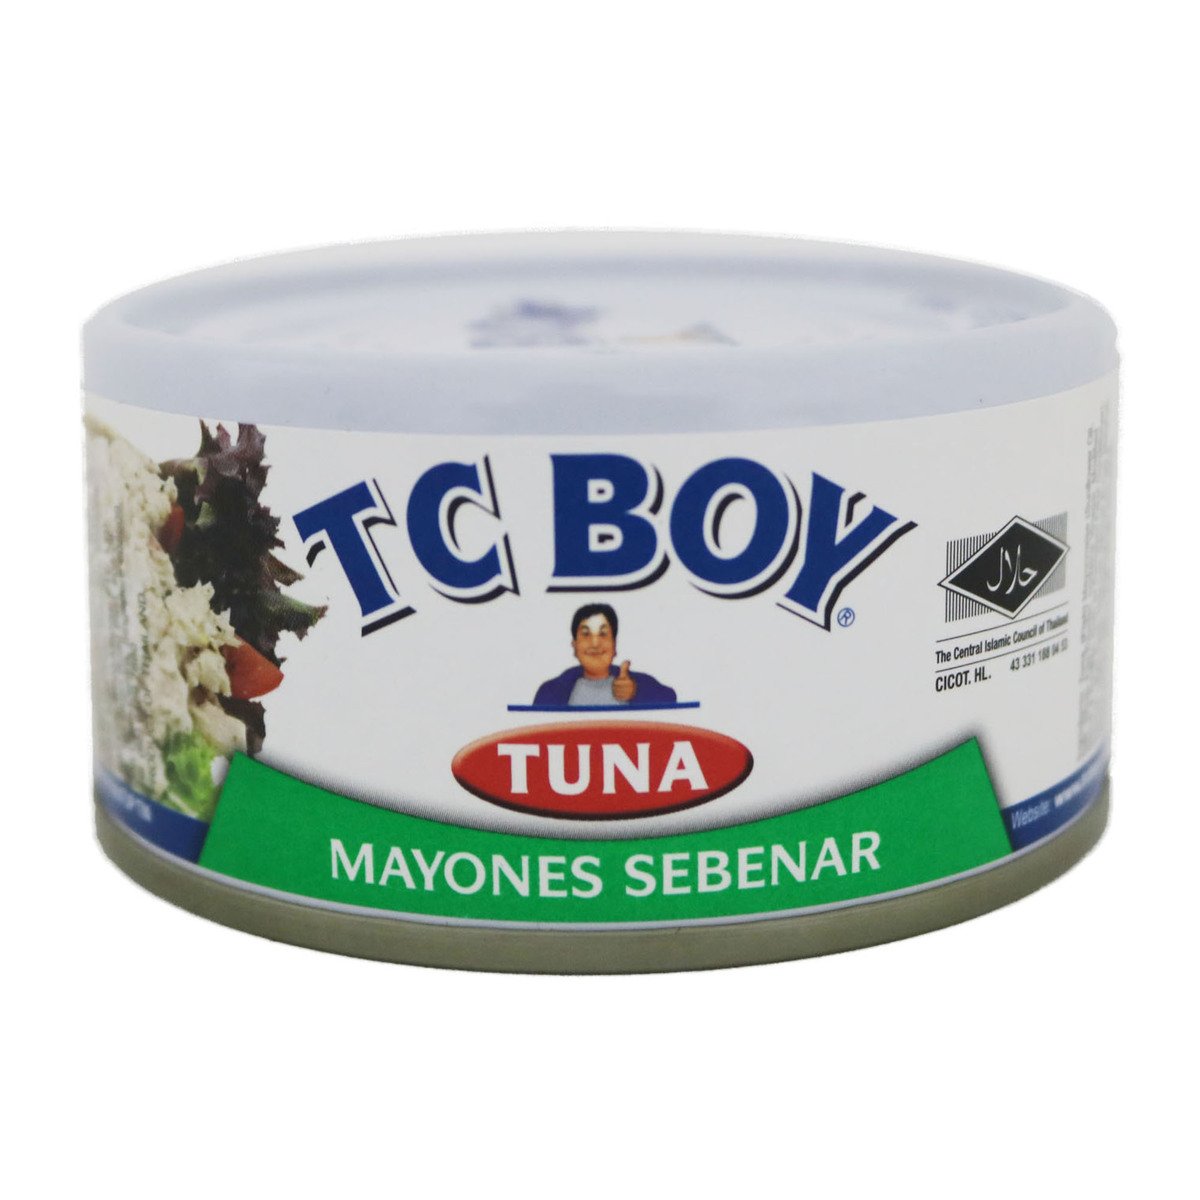 TC Boy Tuna Real Mayonnaise 150g